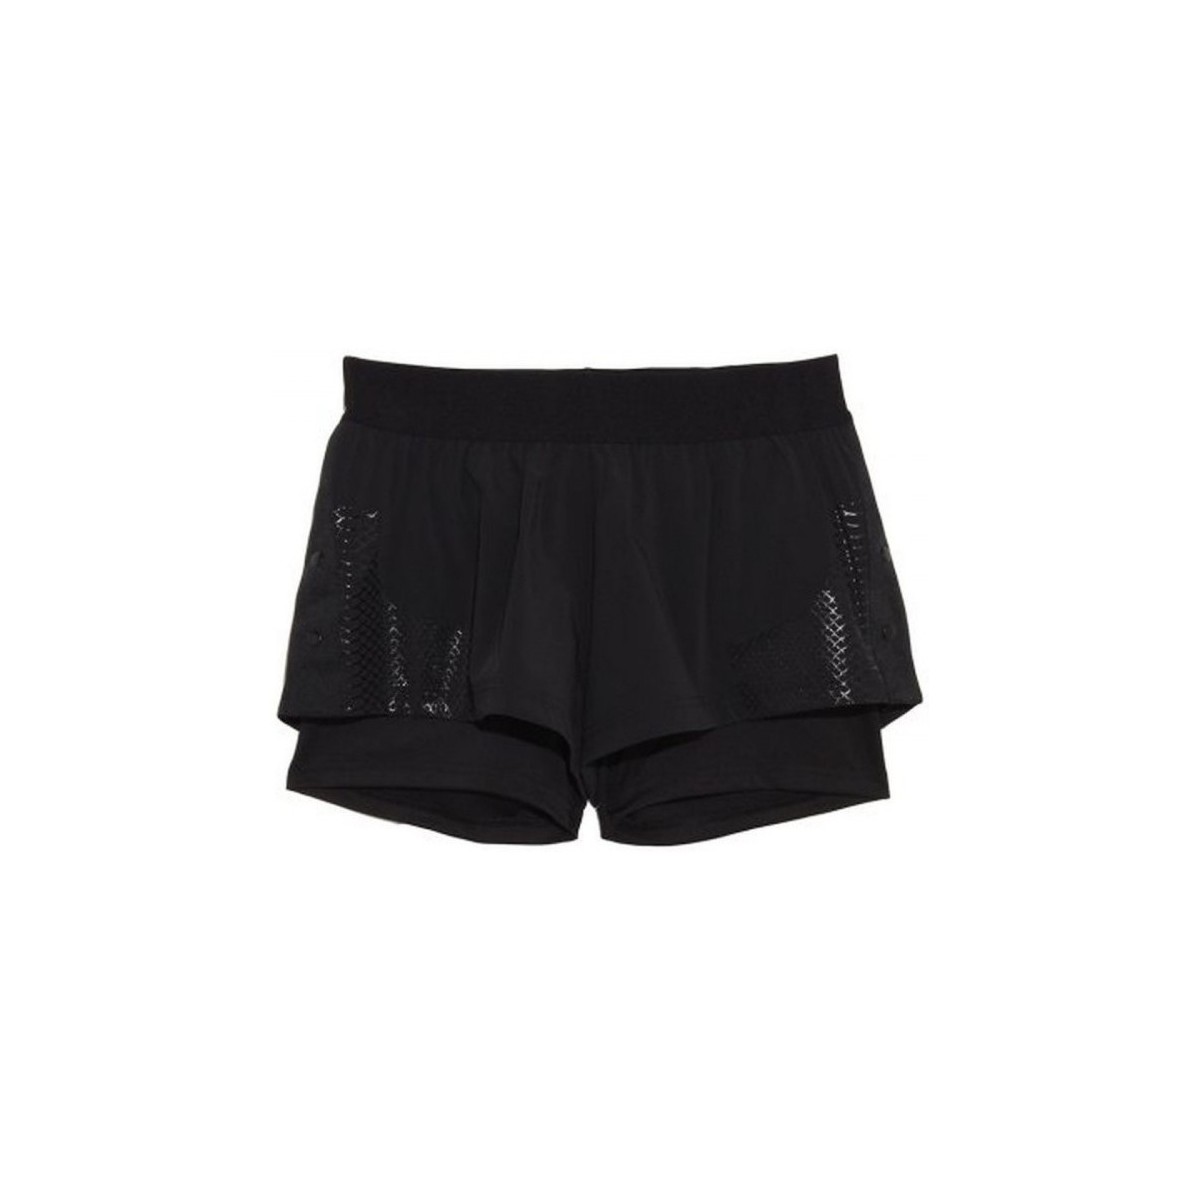 Textiel Dames Korte broeken / Bermuda's adidas Originals SMcC Training Shorts Zwart